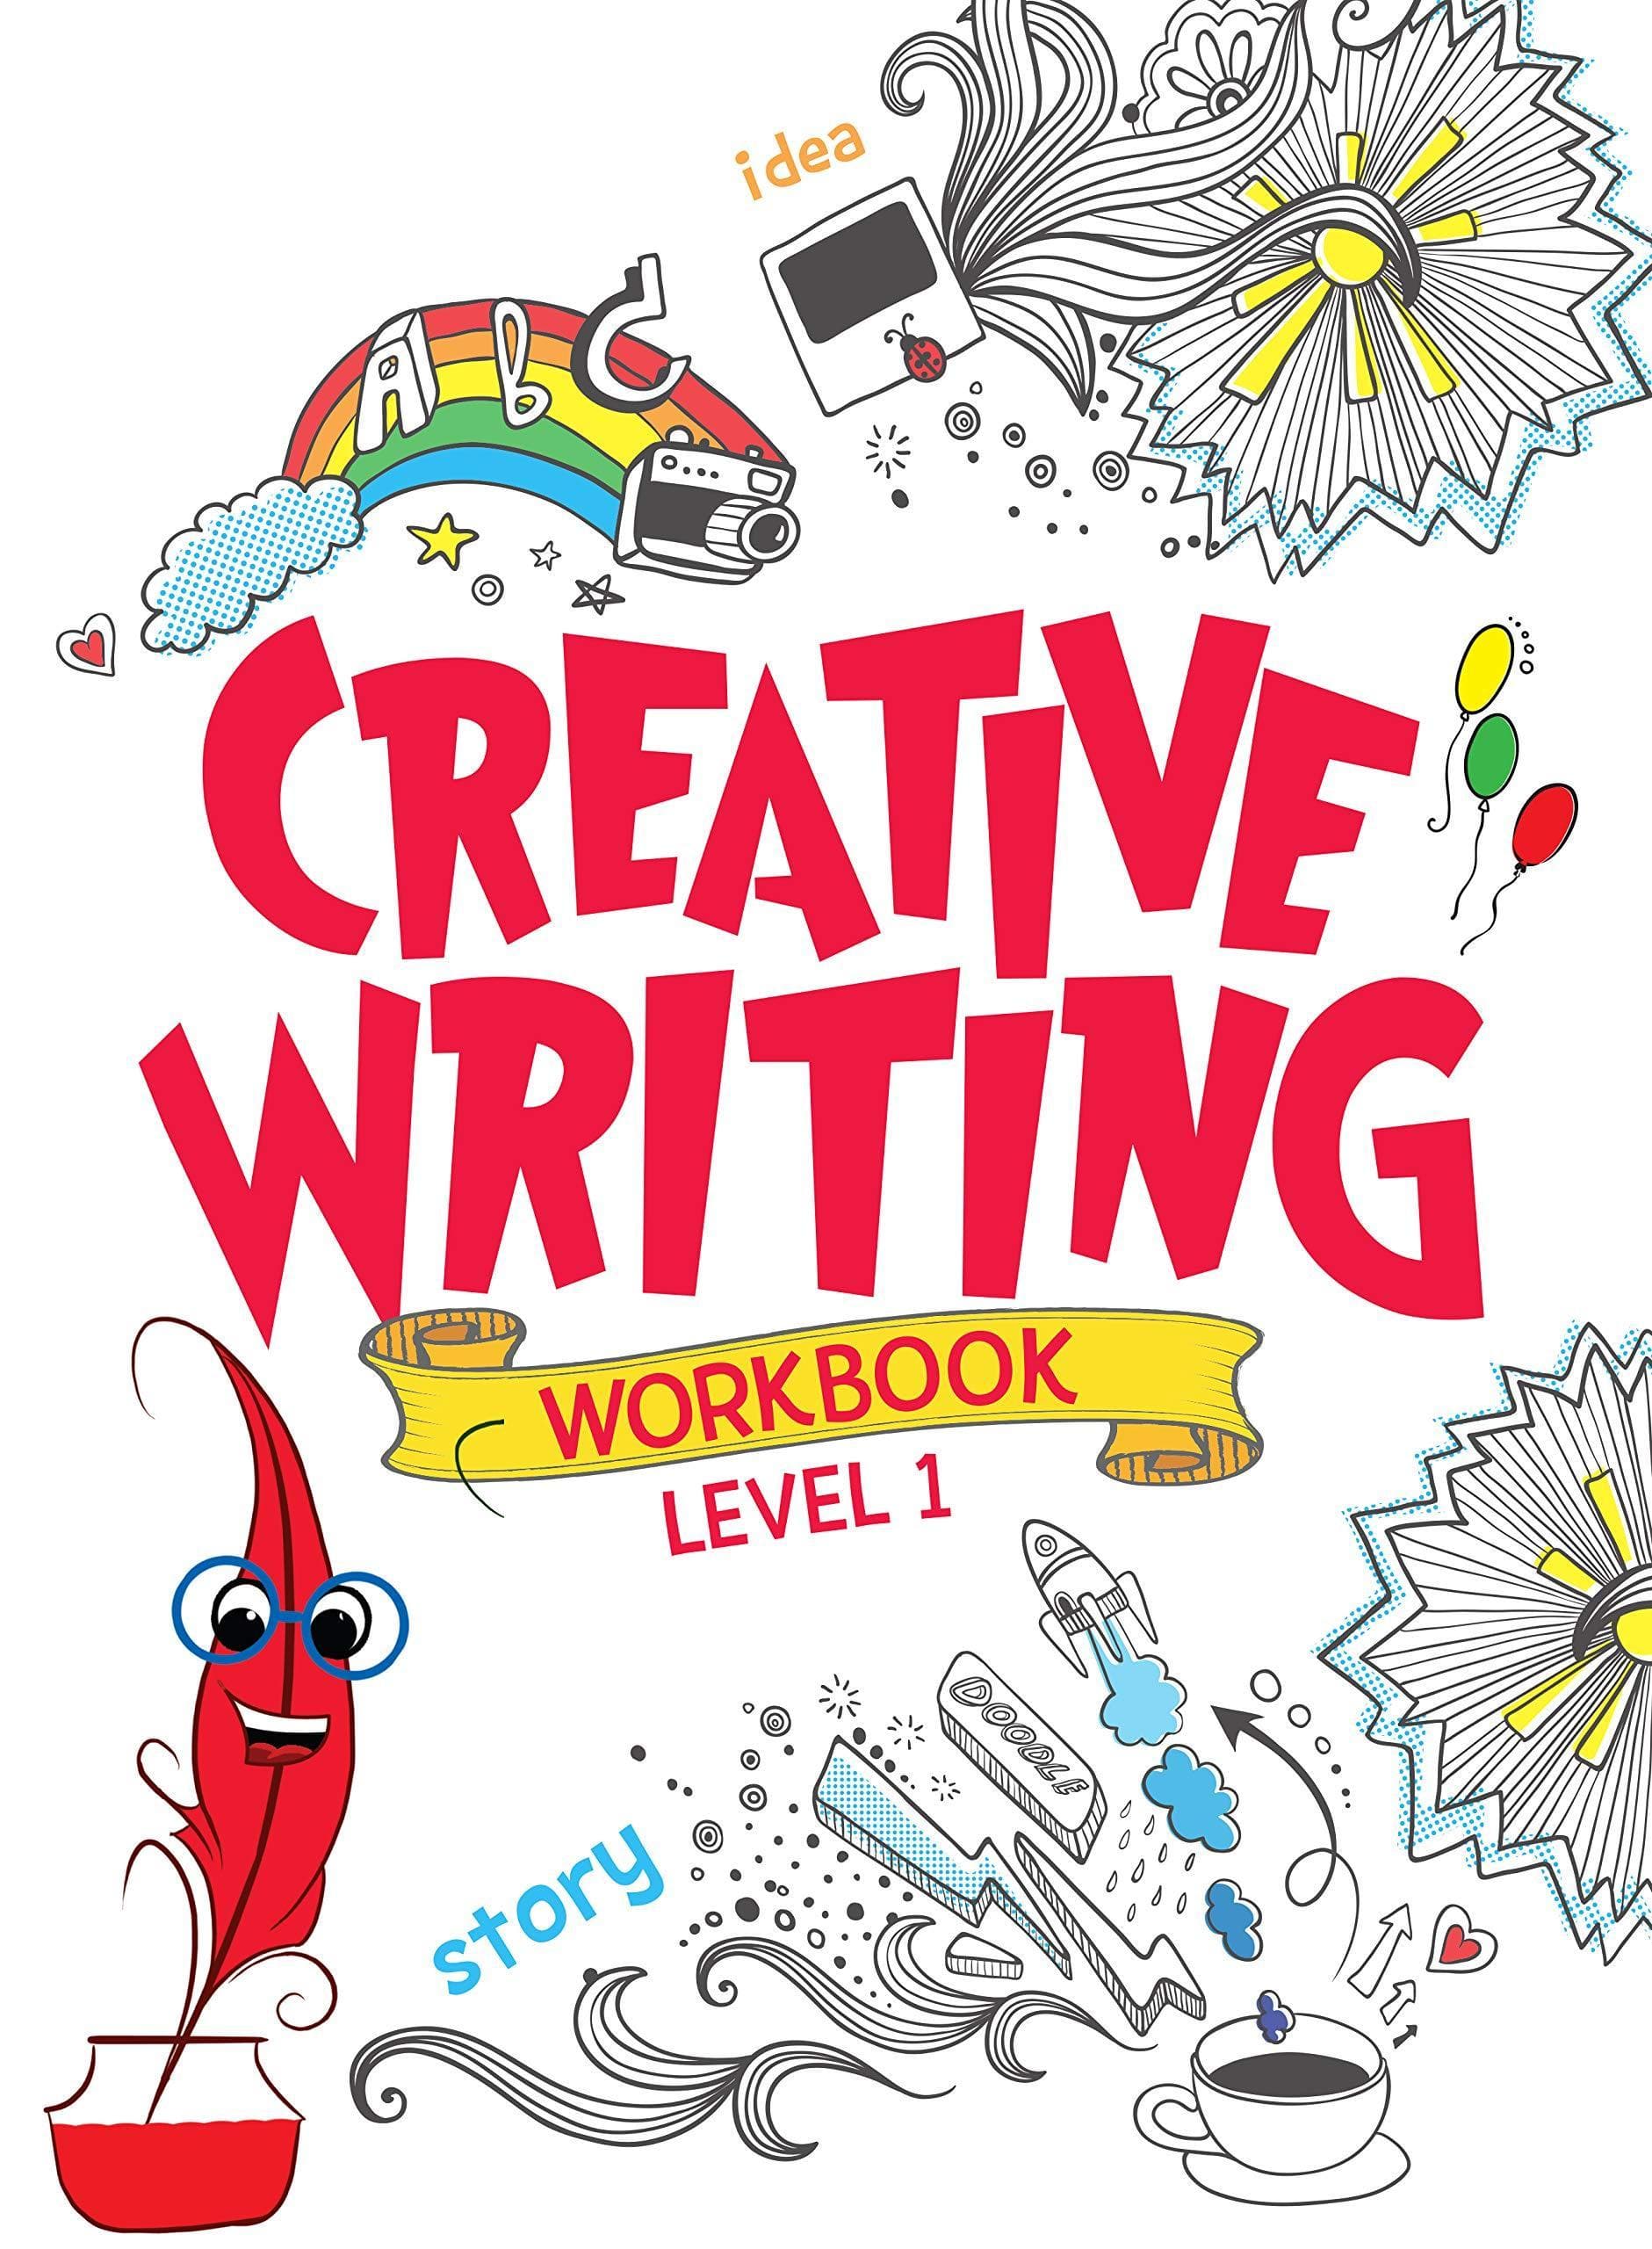 CREATIVE WRITING WORKBOOK 1